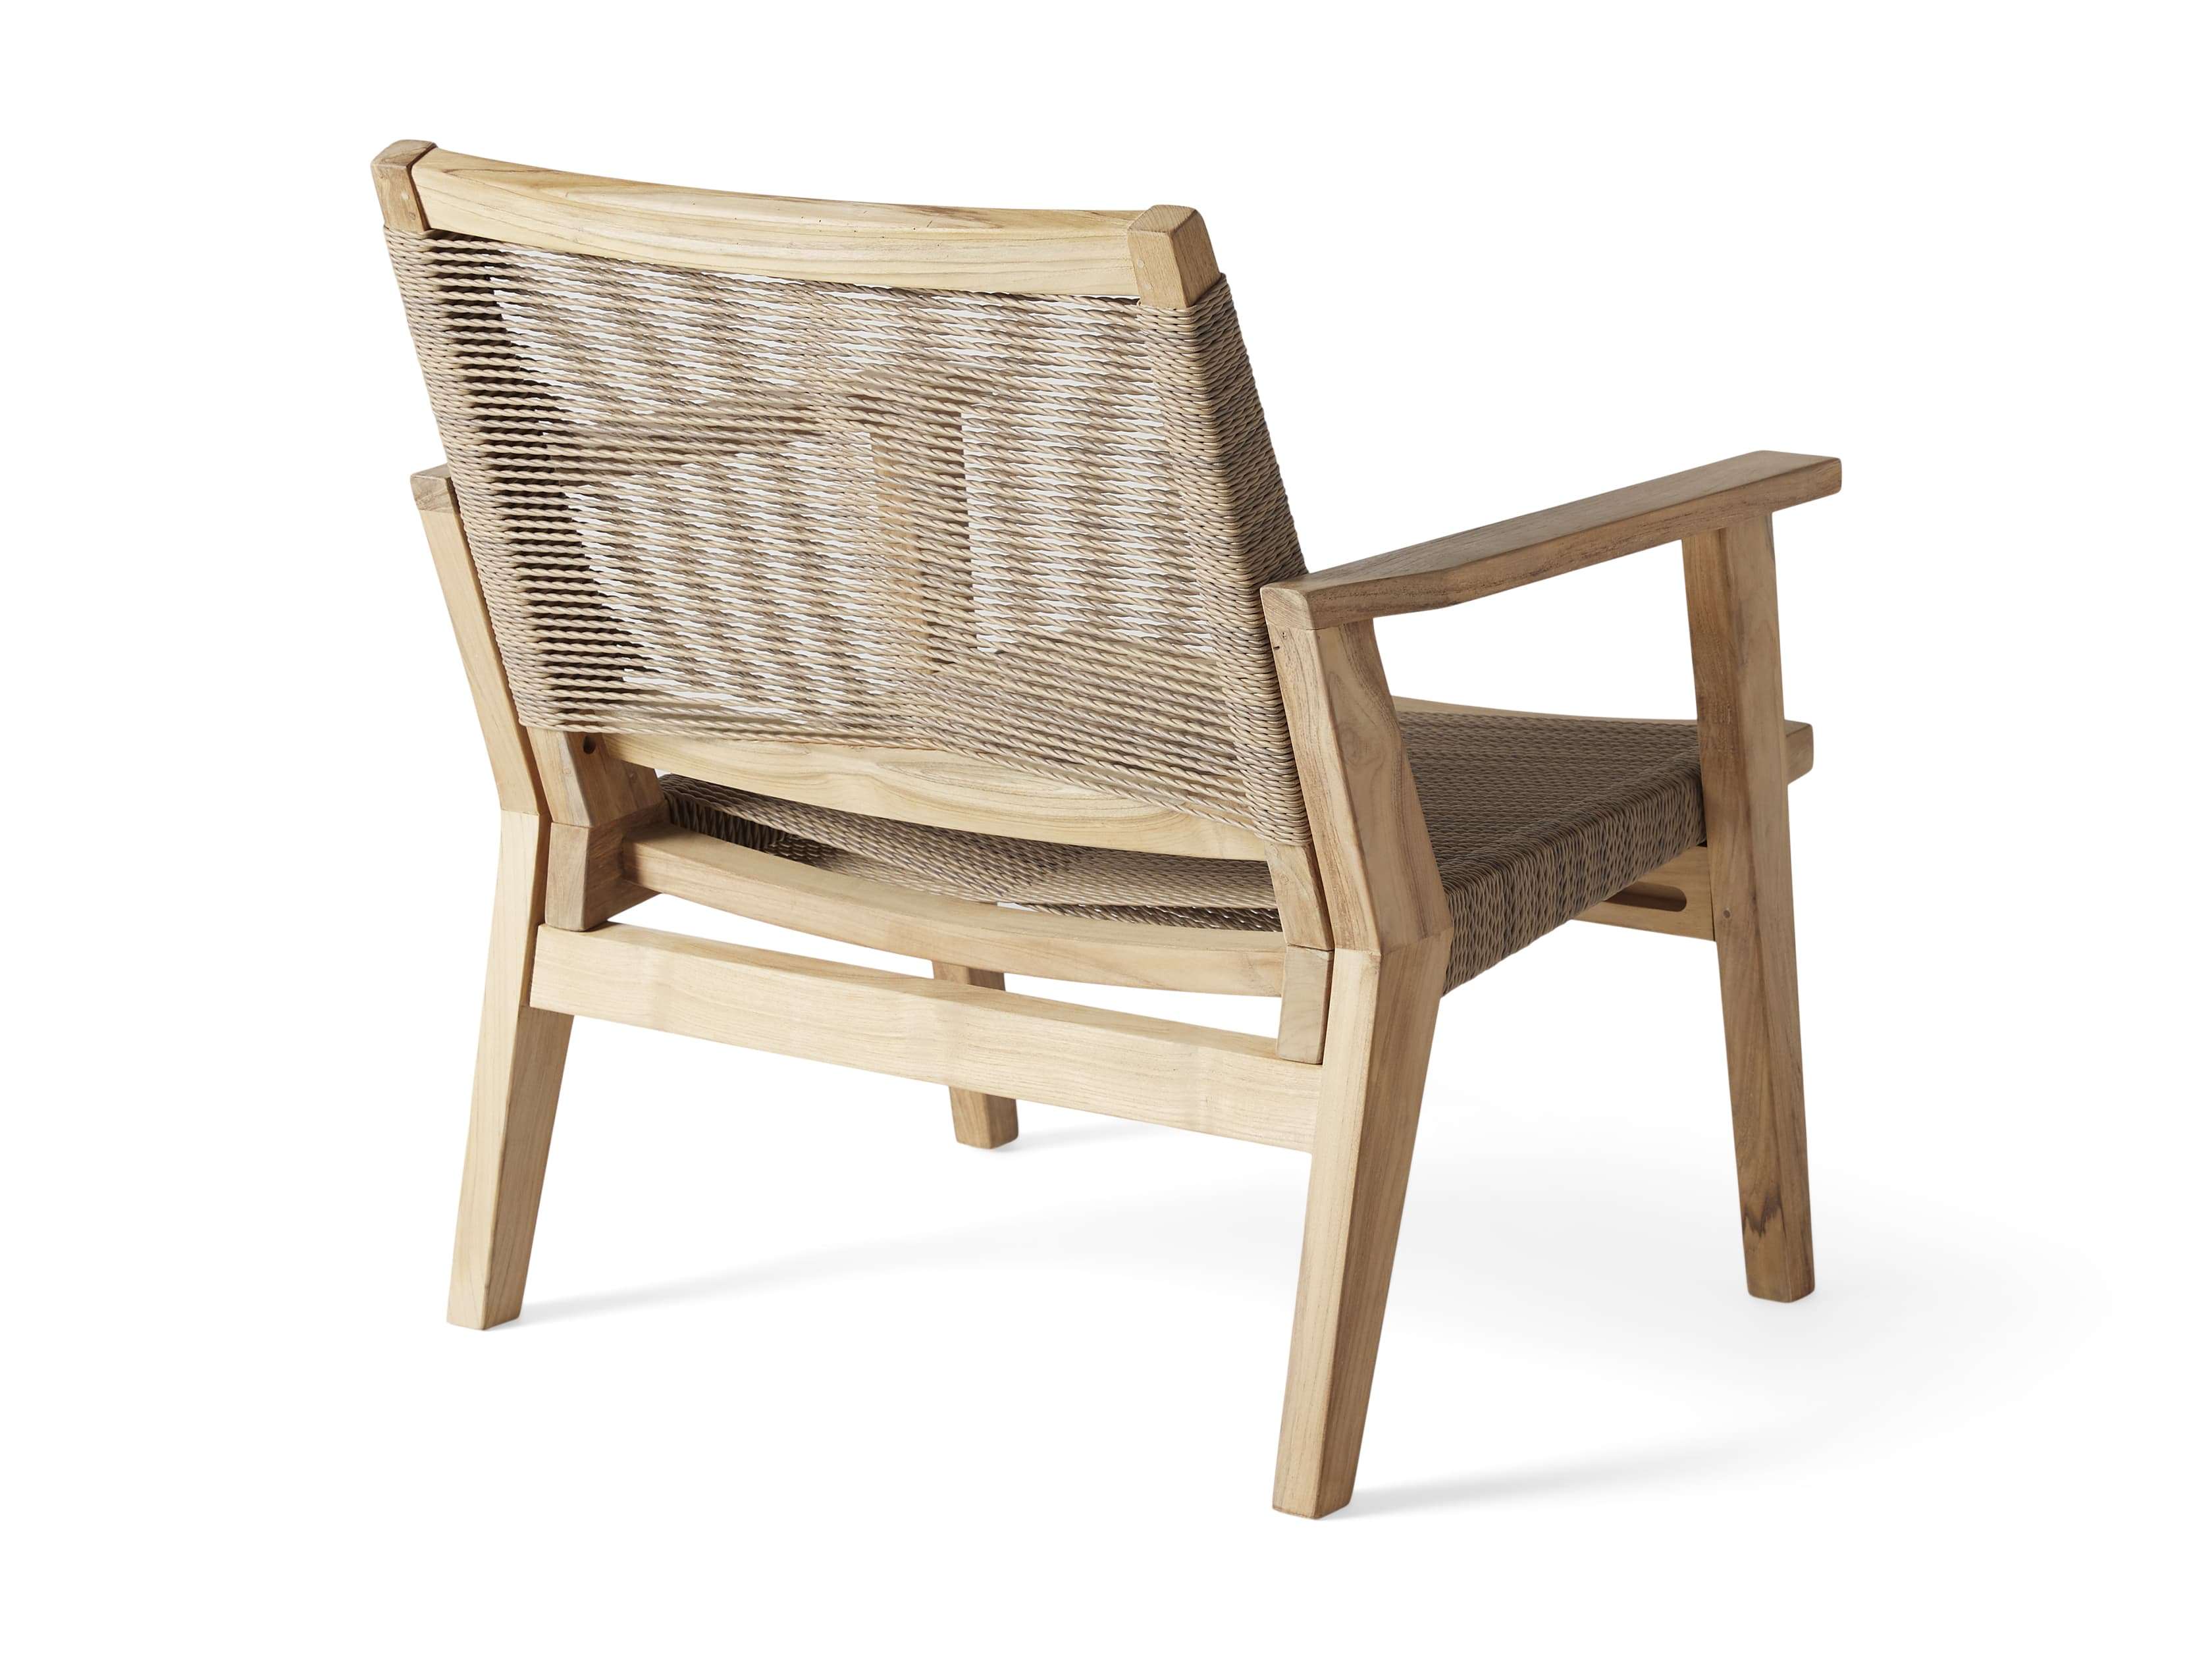 Tulum Outdoor Lounge Chair Arhaus, Wicker And Wood Outdoor Furniture